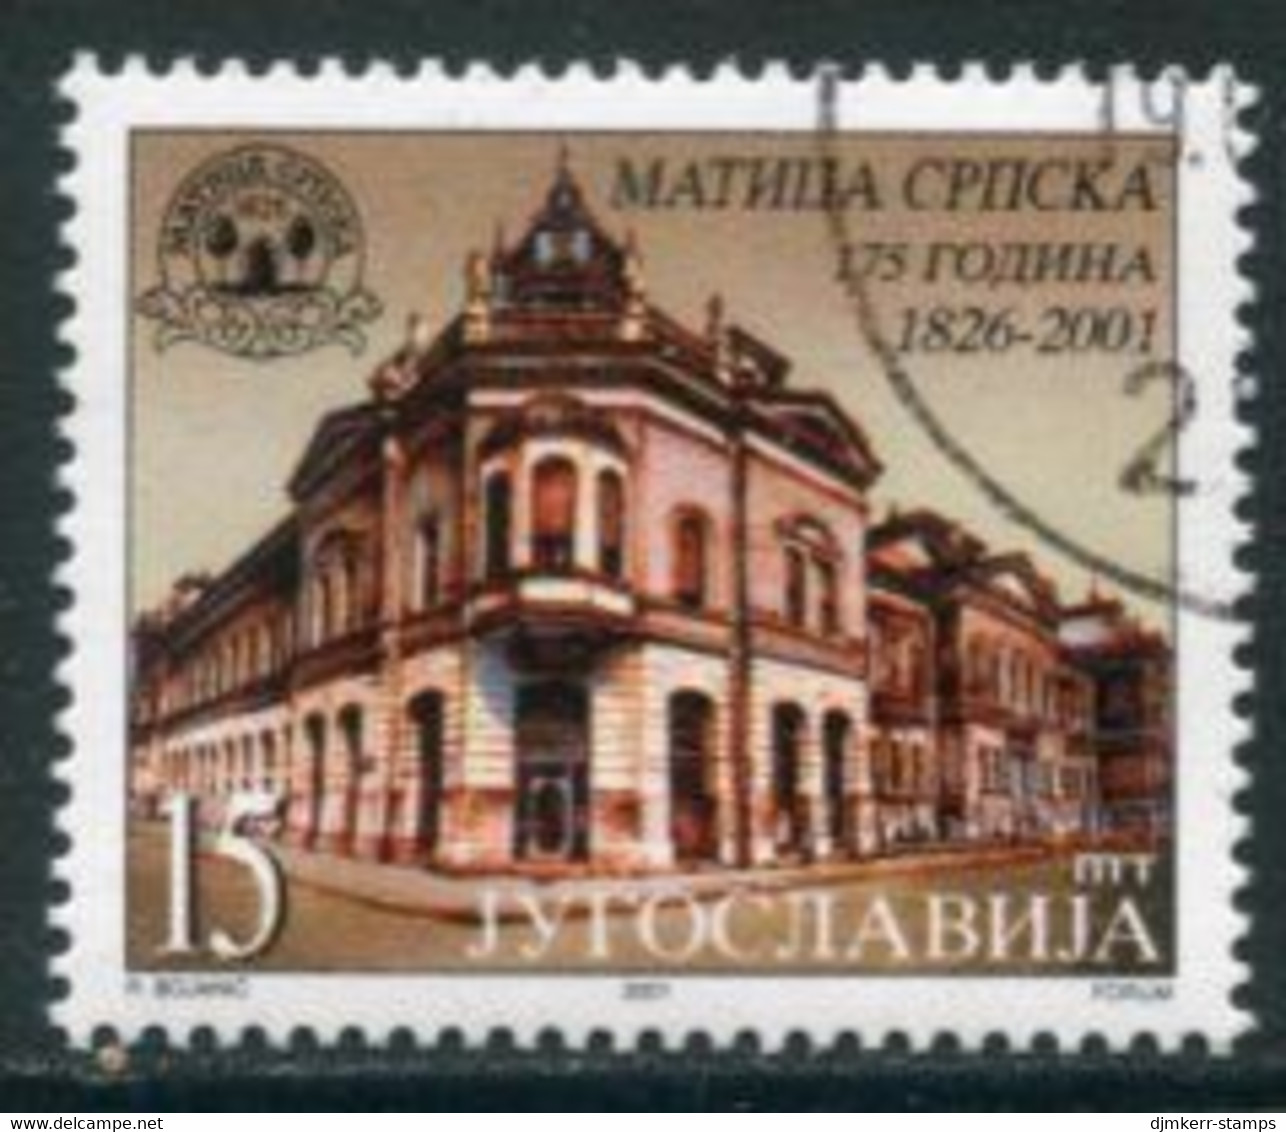 YUGOSLAVIA 2001 Matica Srpska Literary Association Used.  Michel 3012 - Usados